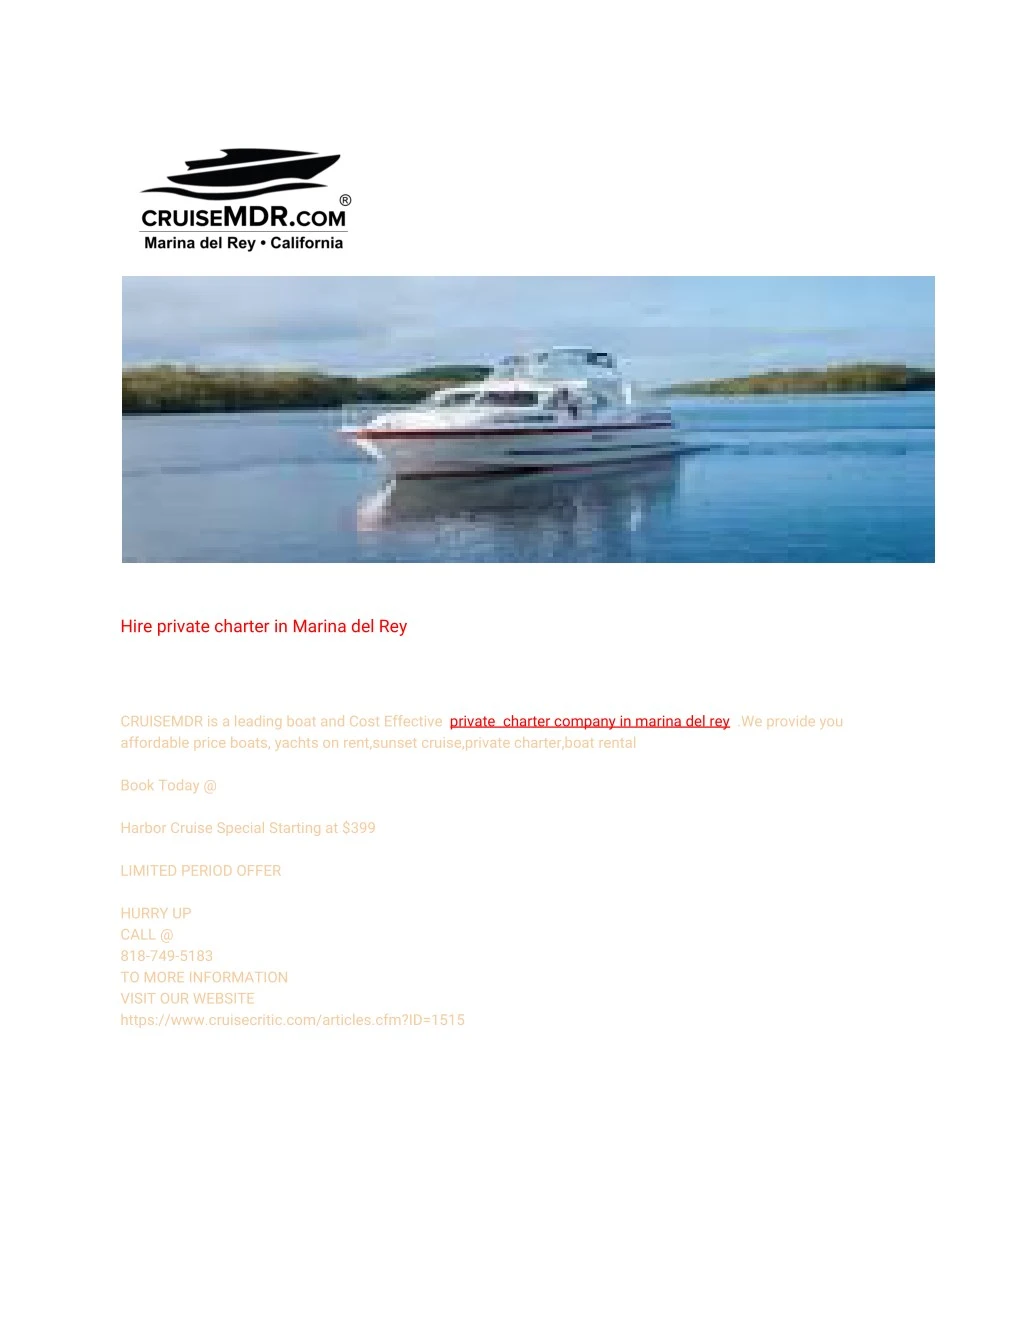 hire private charter in marina del rey cruisemdr